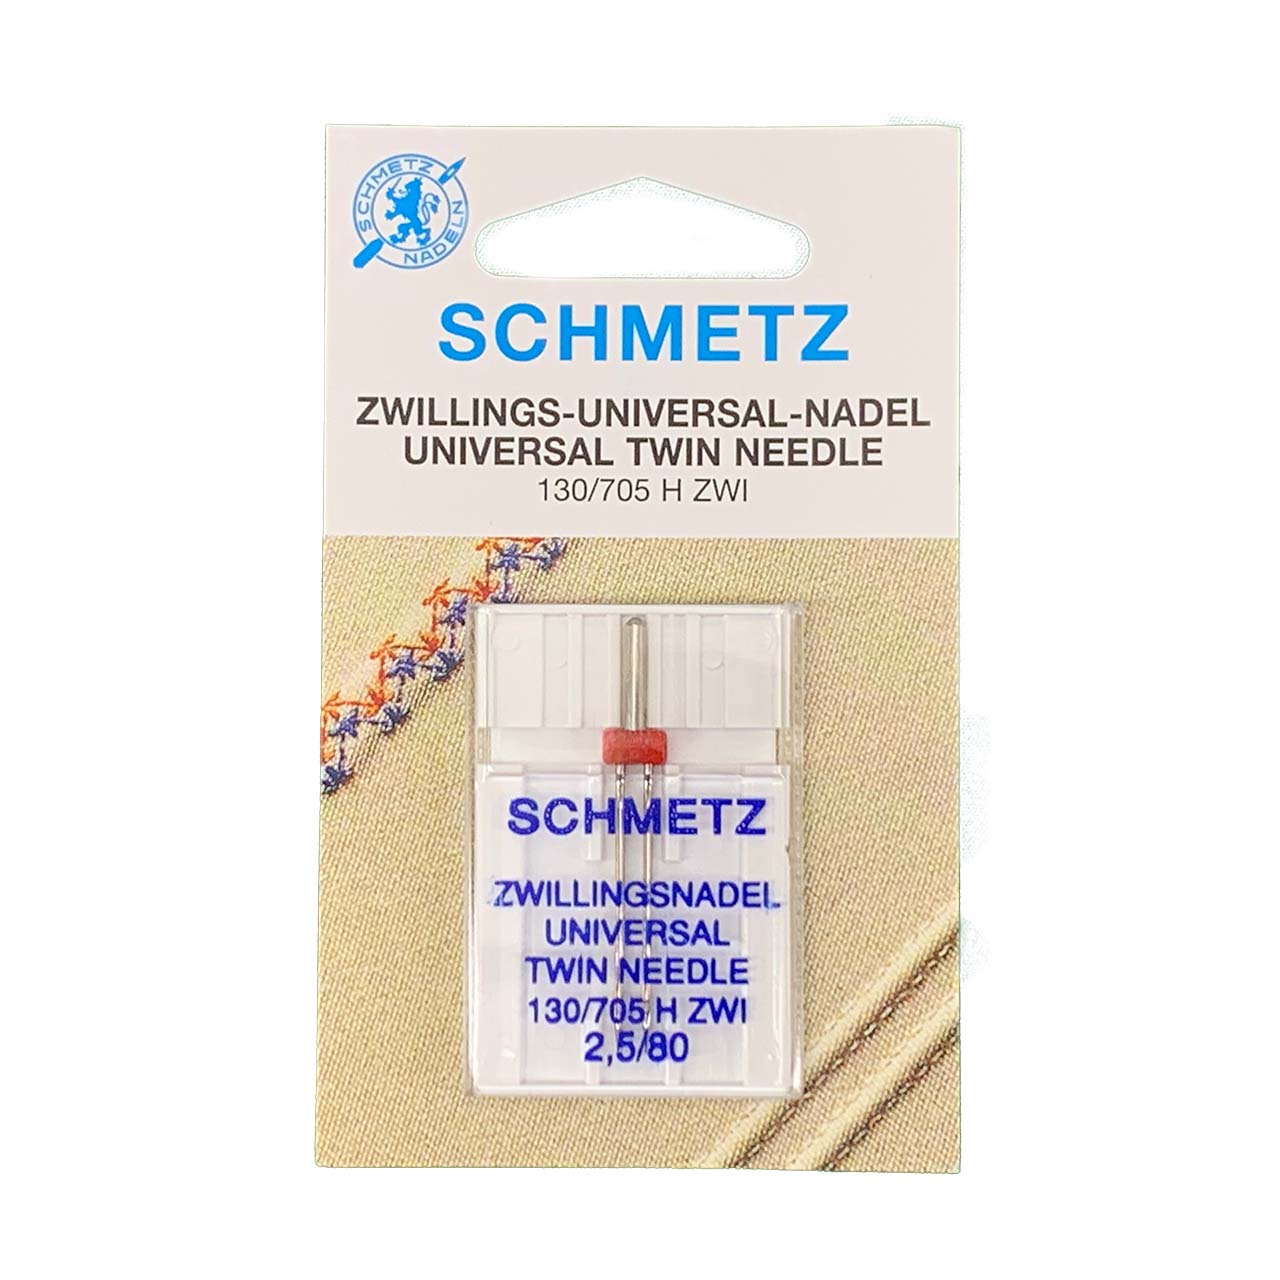 Schmetz Universal Twin Sewing Machine Needle 2.5/80